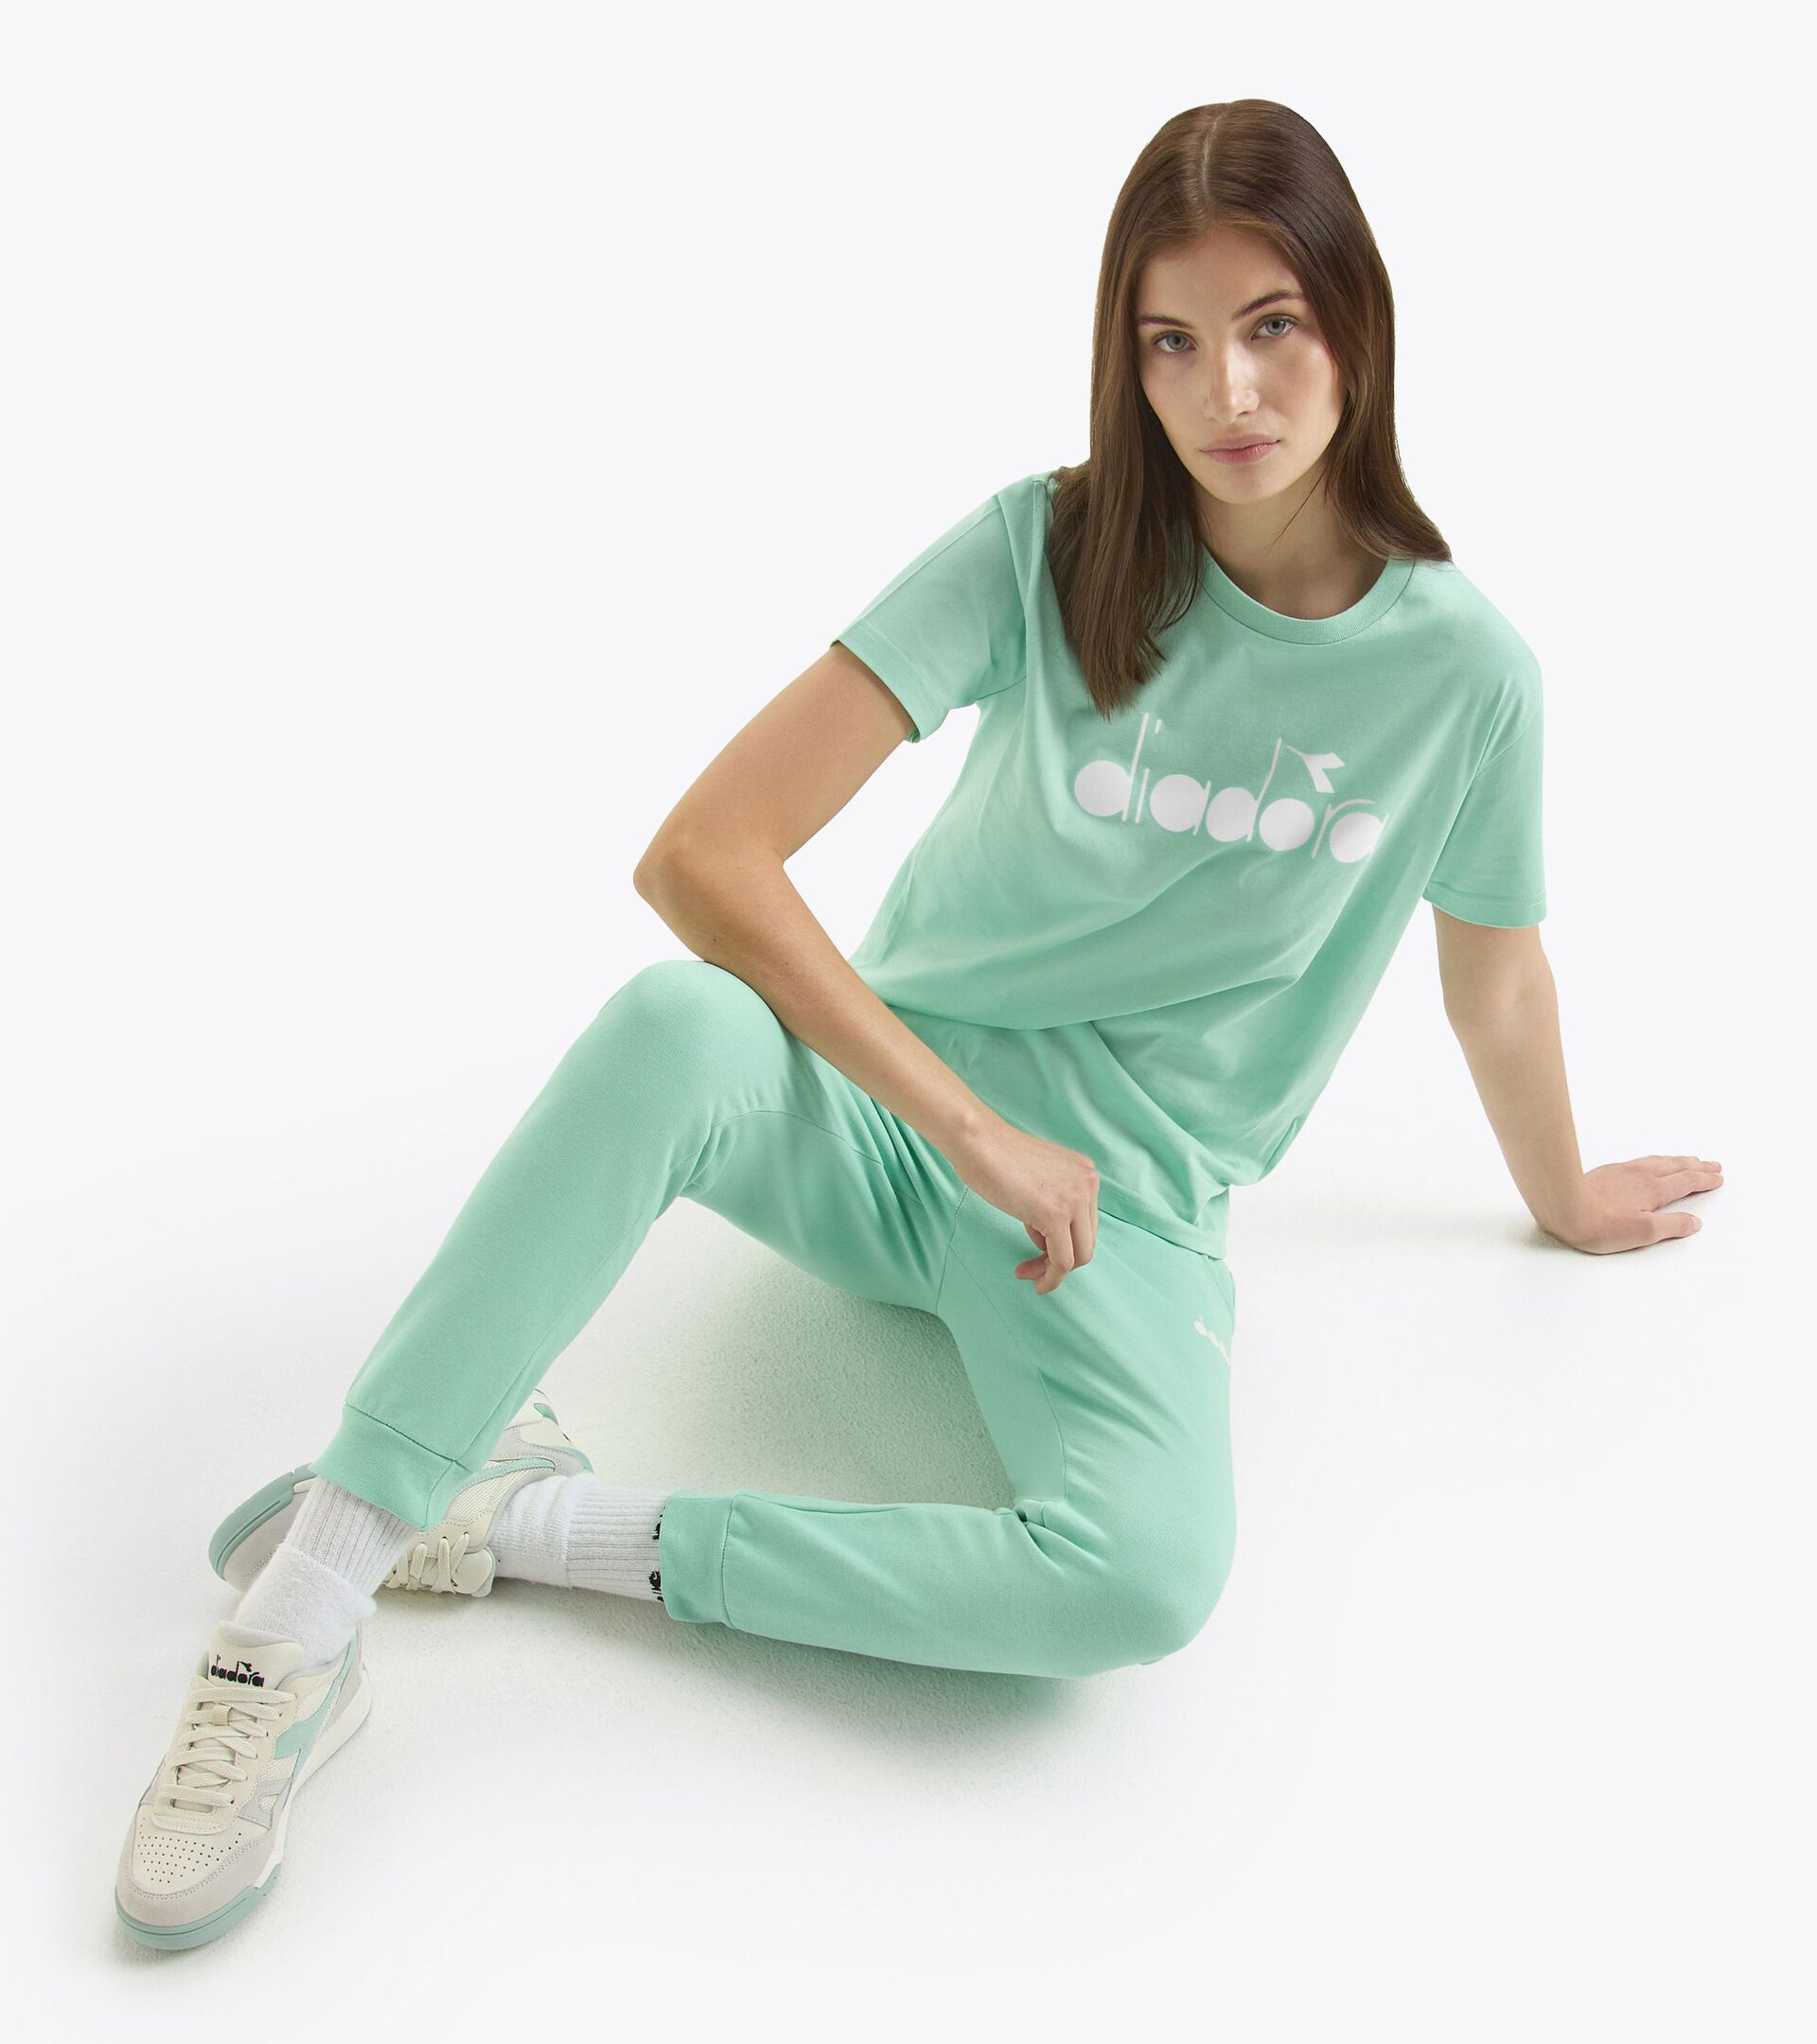 T-shirt - Made in Italy - Gender Neutral T-SHIRT SS LOGO NEON GREEN - Diadora